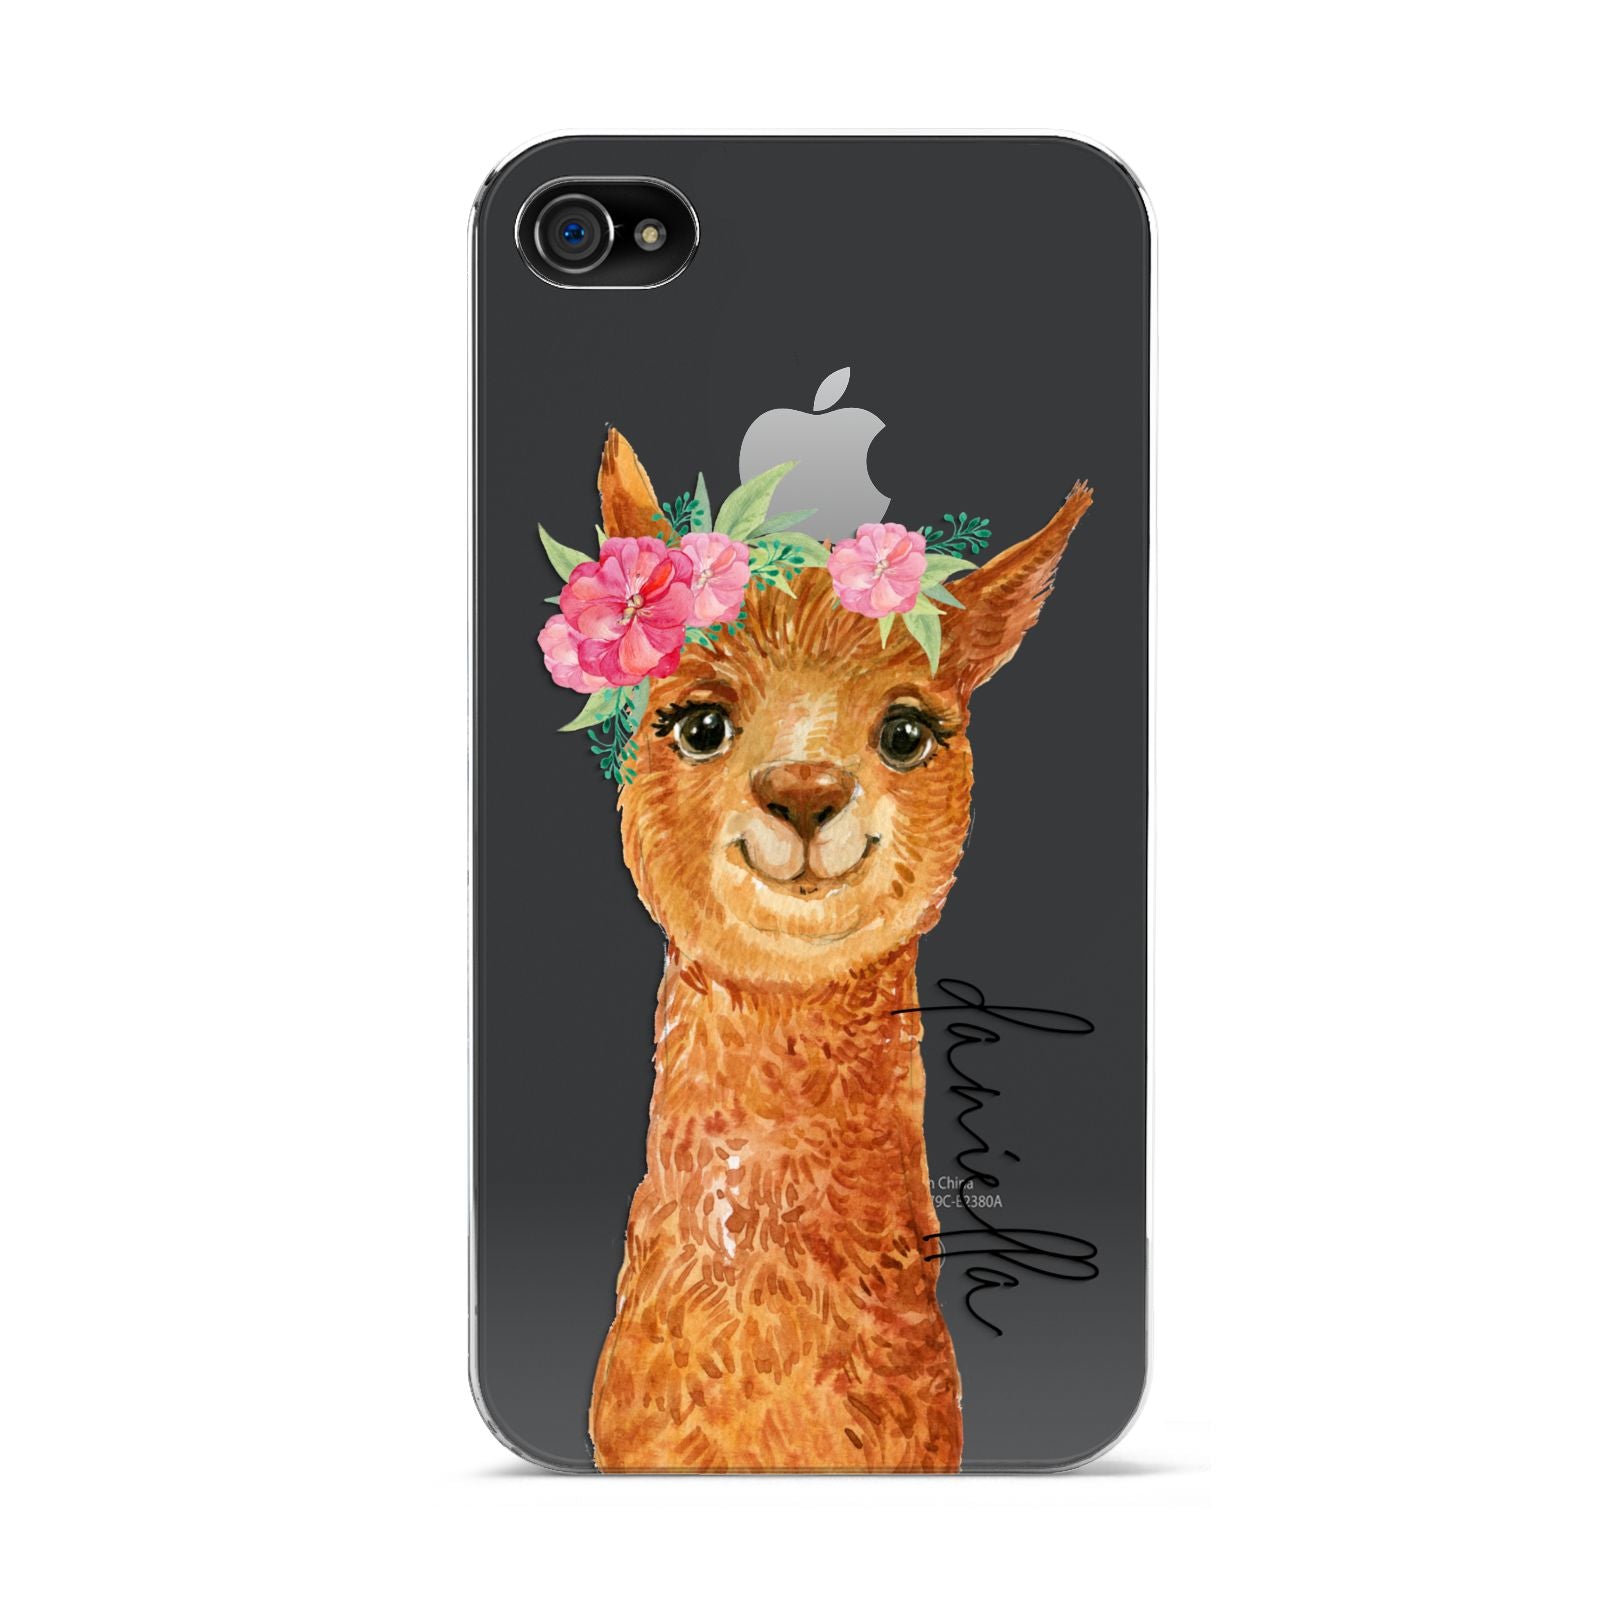 Personalised Llama Apple iPhone 4s Case